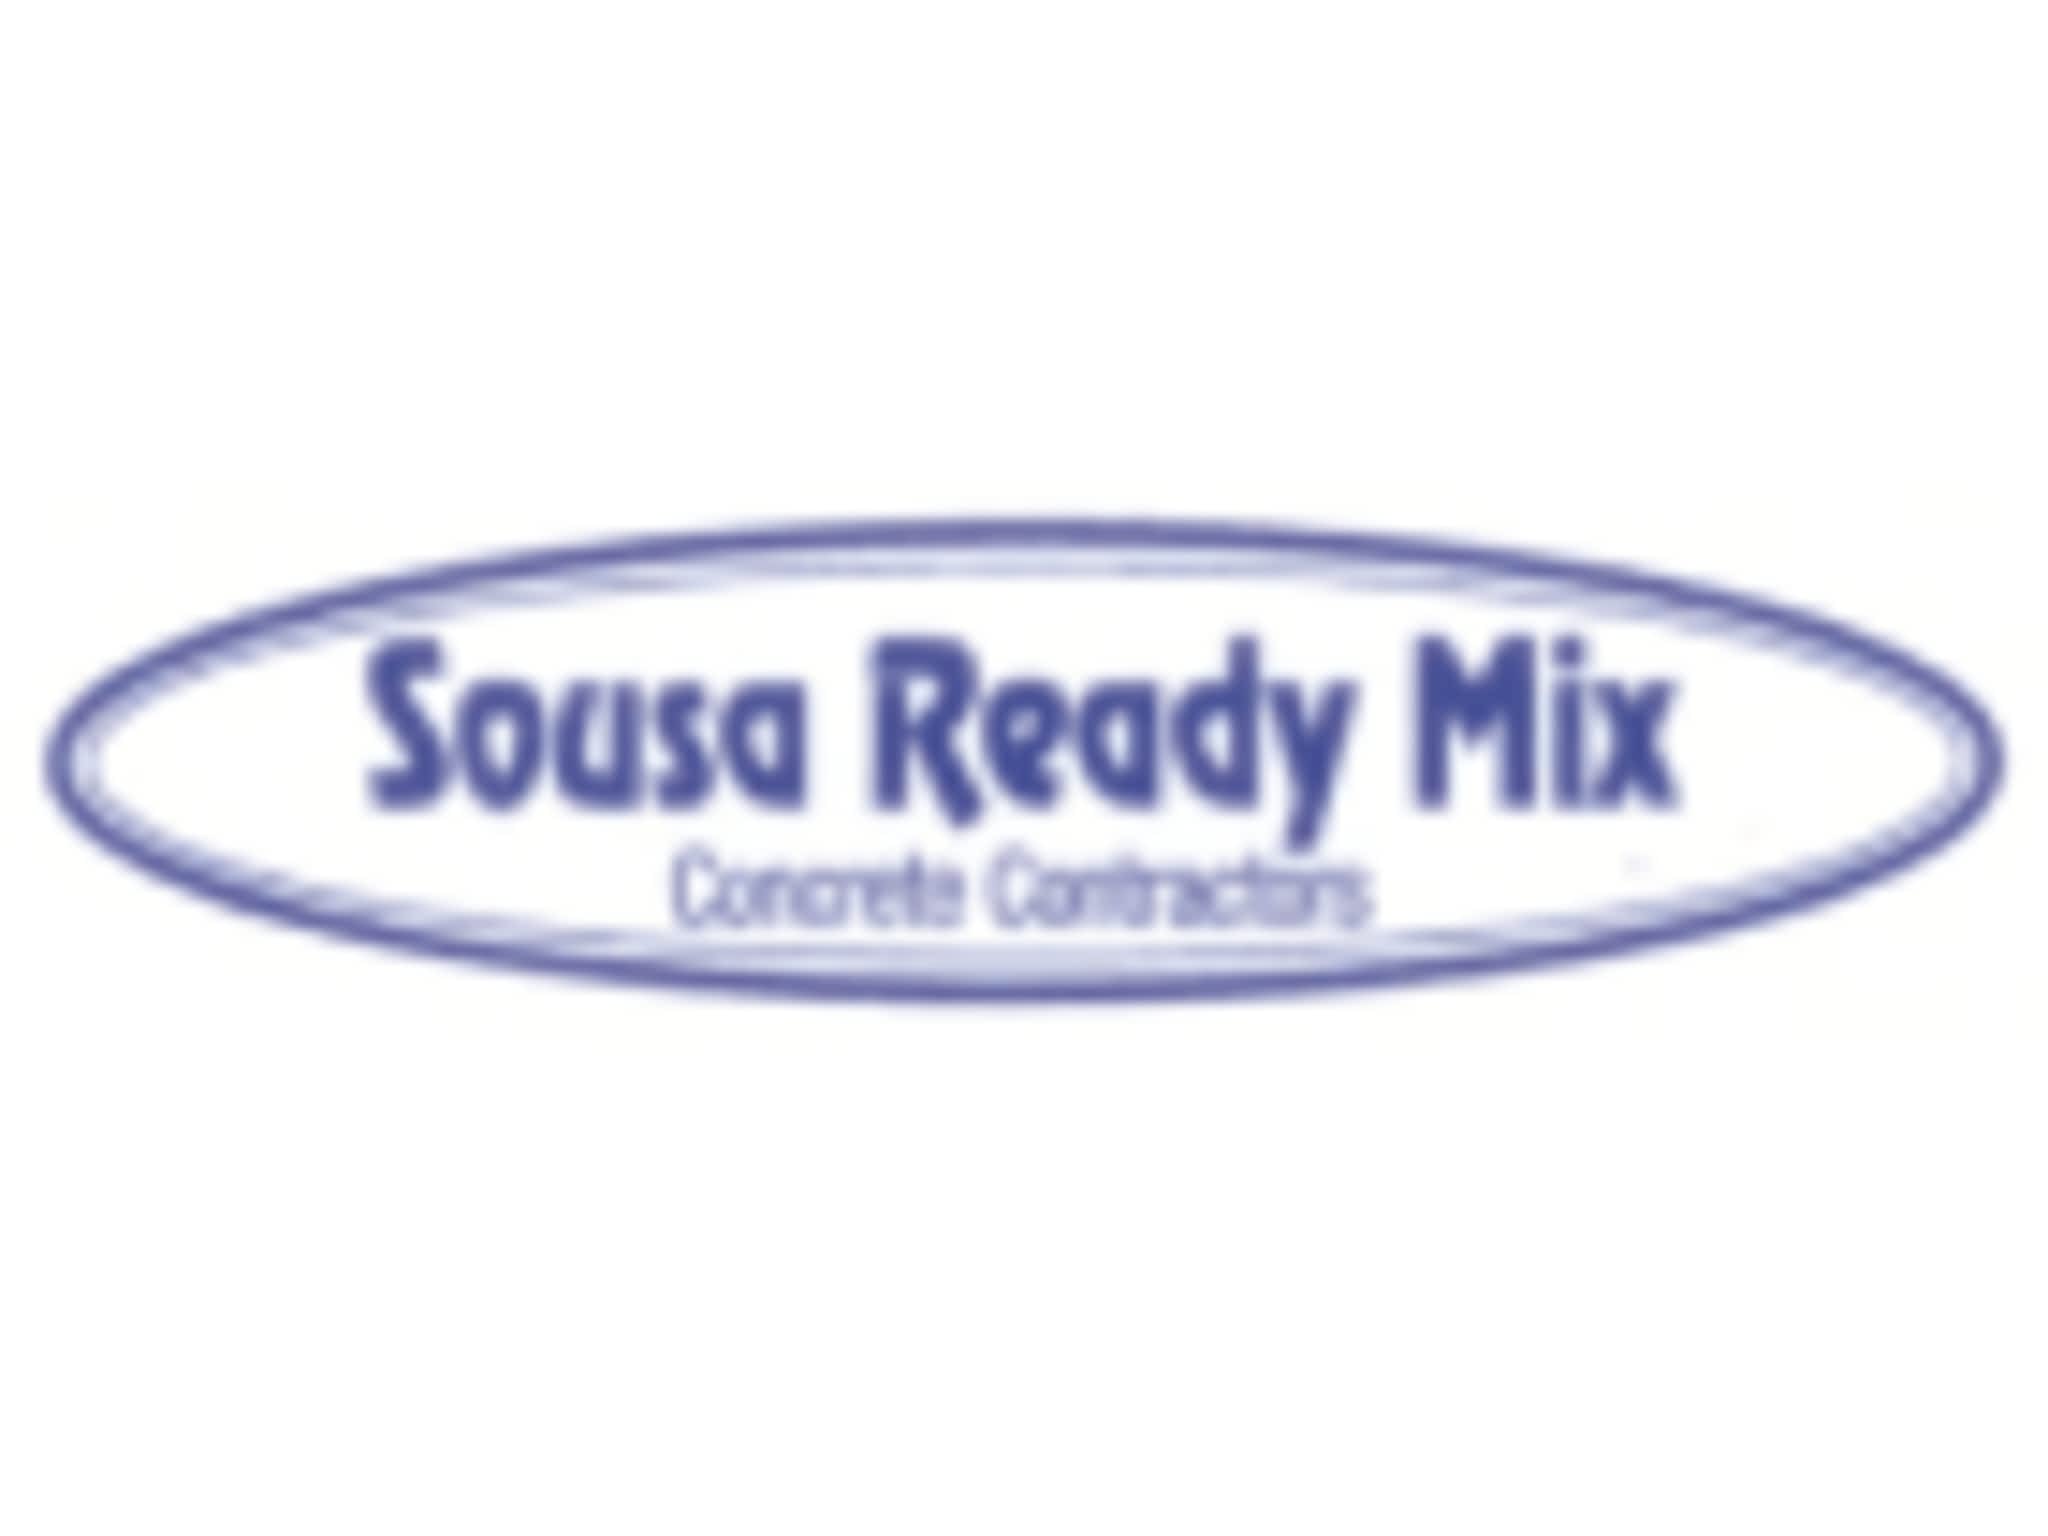 photo Sousa Ready Mix